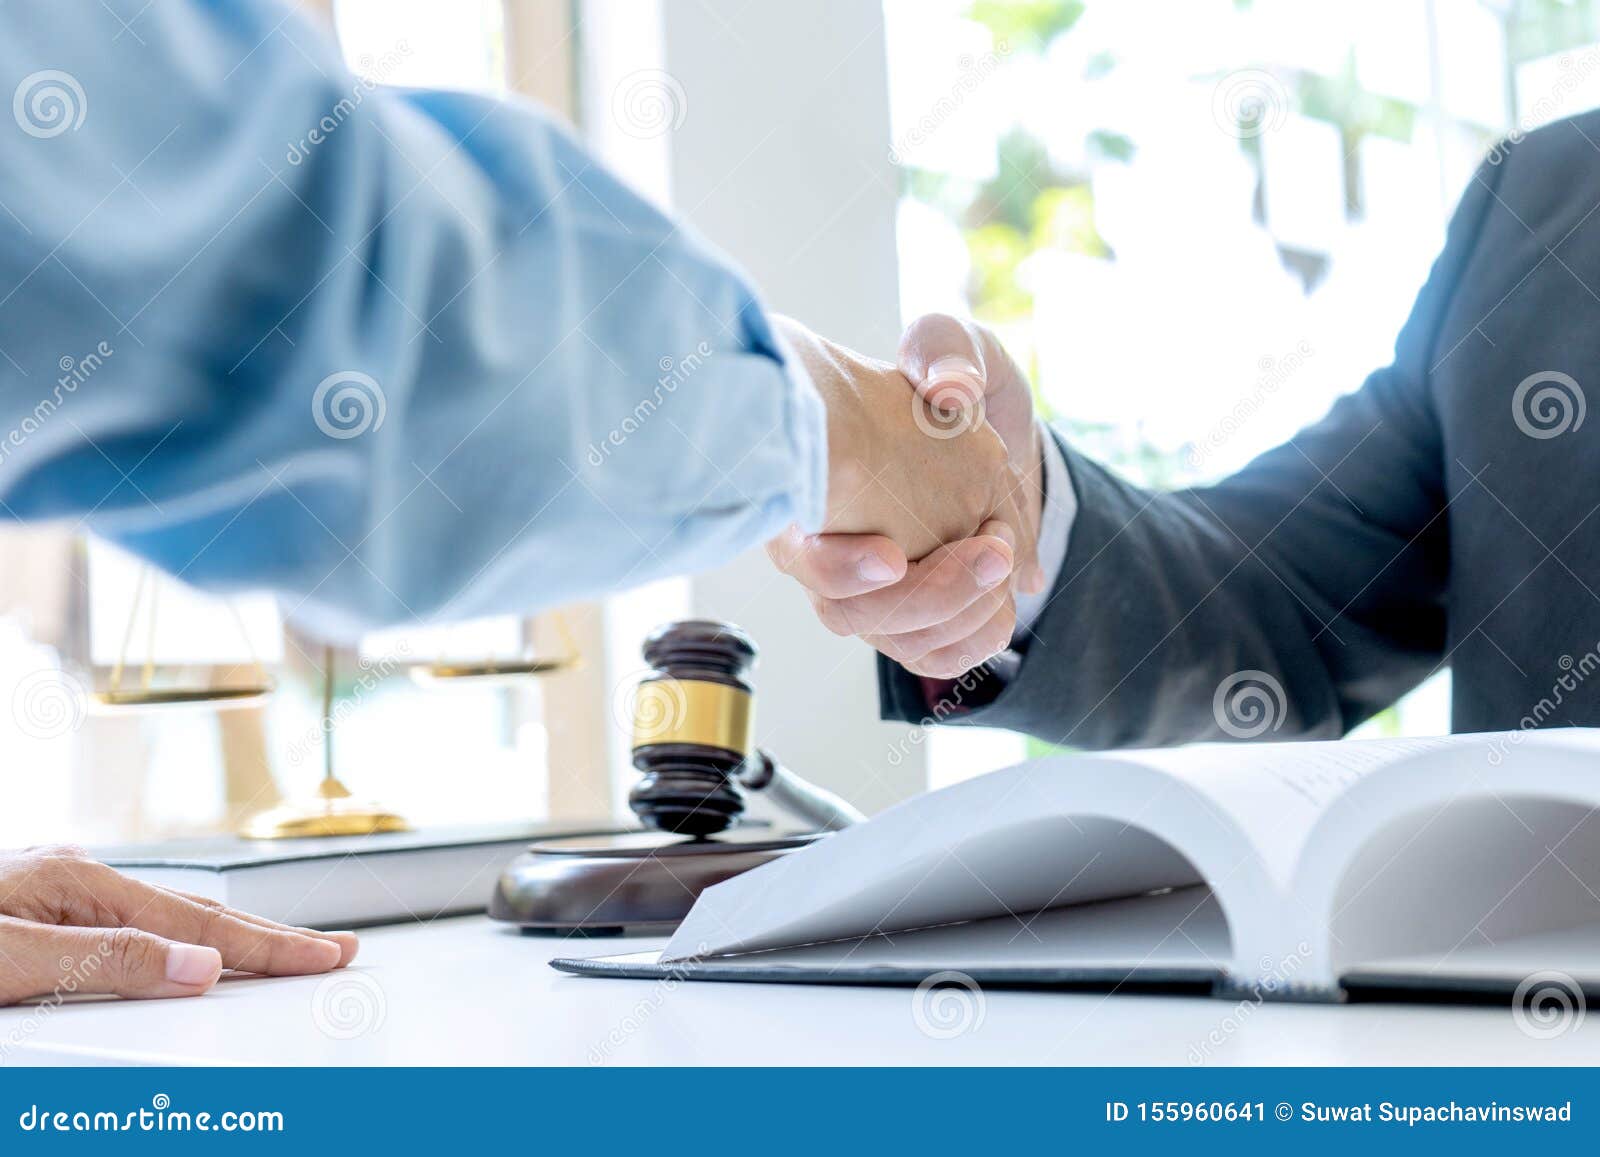 lawyer or judge  with gavel and balance handshake